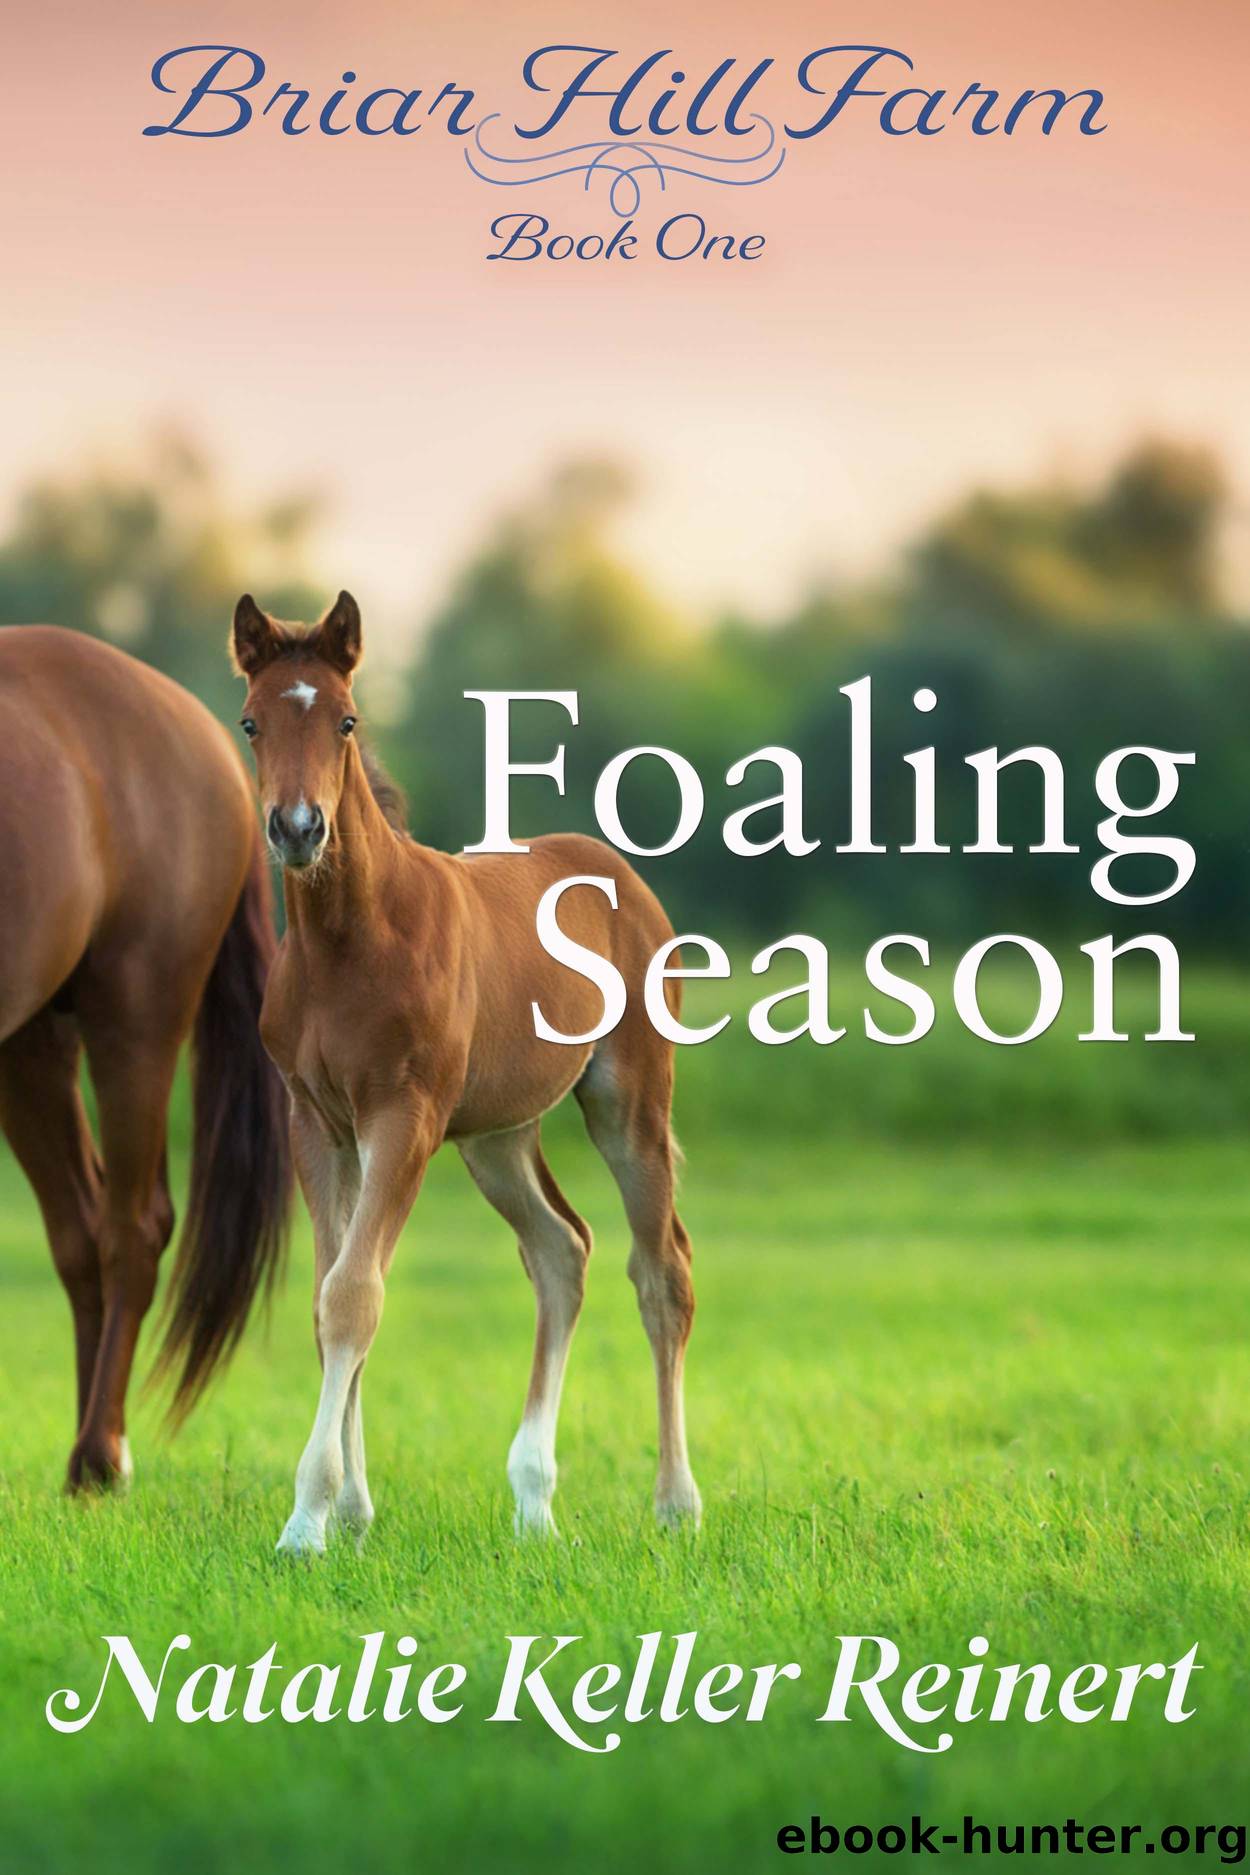 Foaling Season by Natalie Keller Reinert